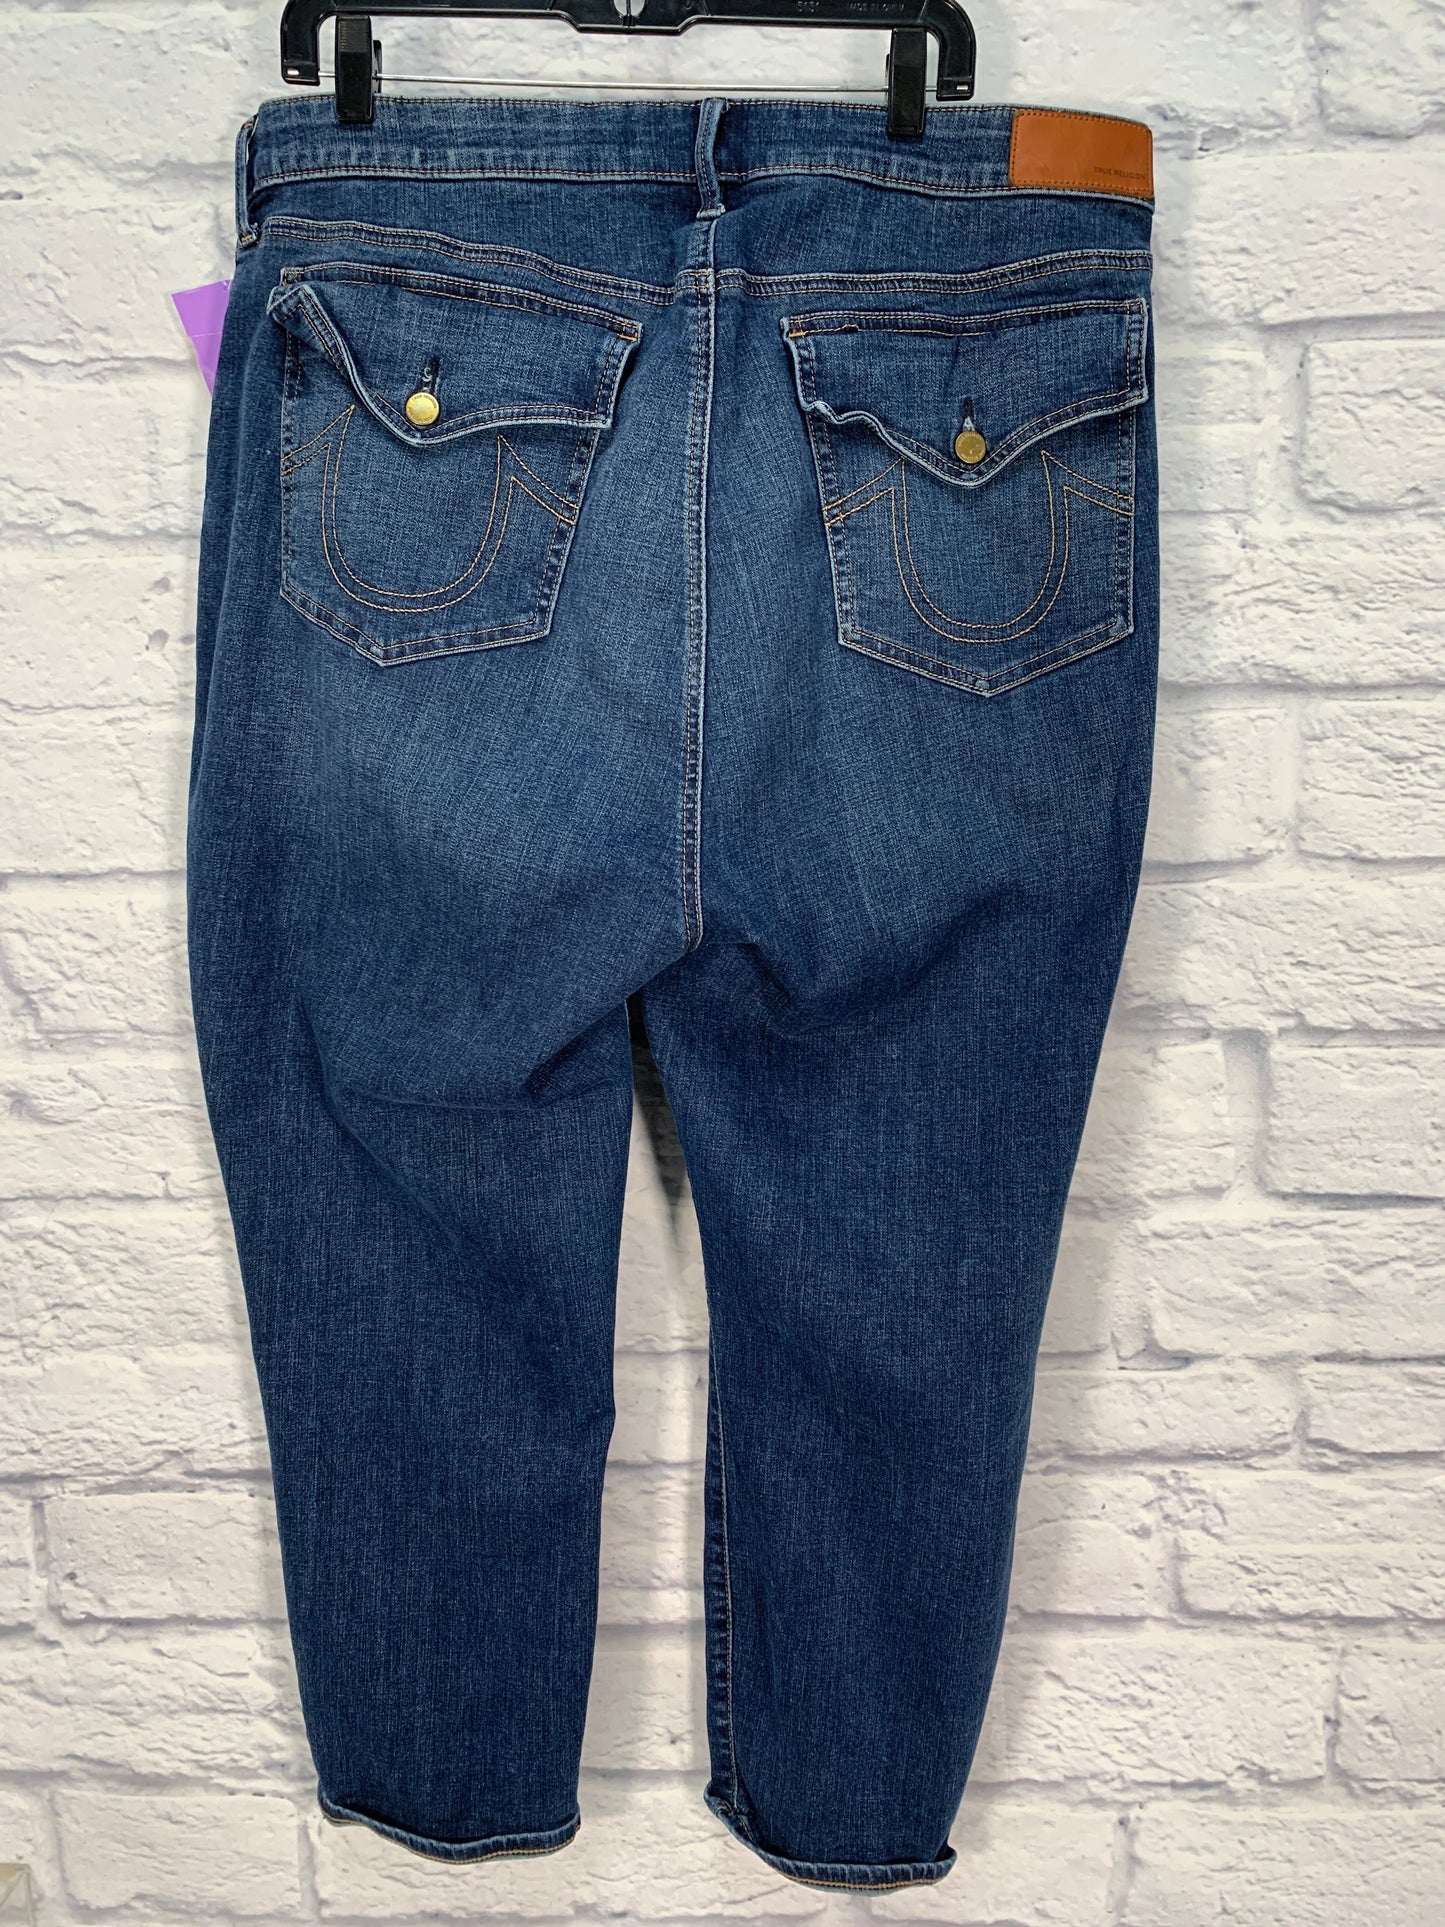 Blue Denim Jeans Designer True Religion, Size 24w